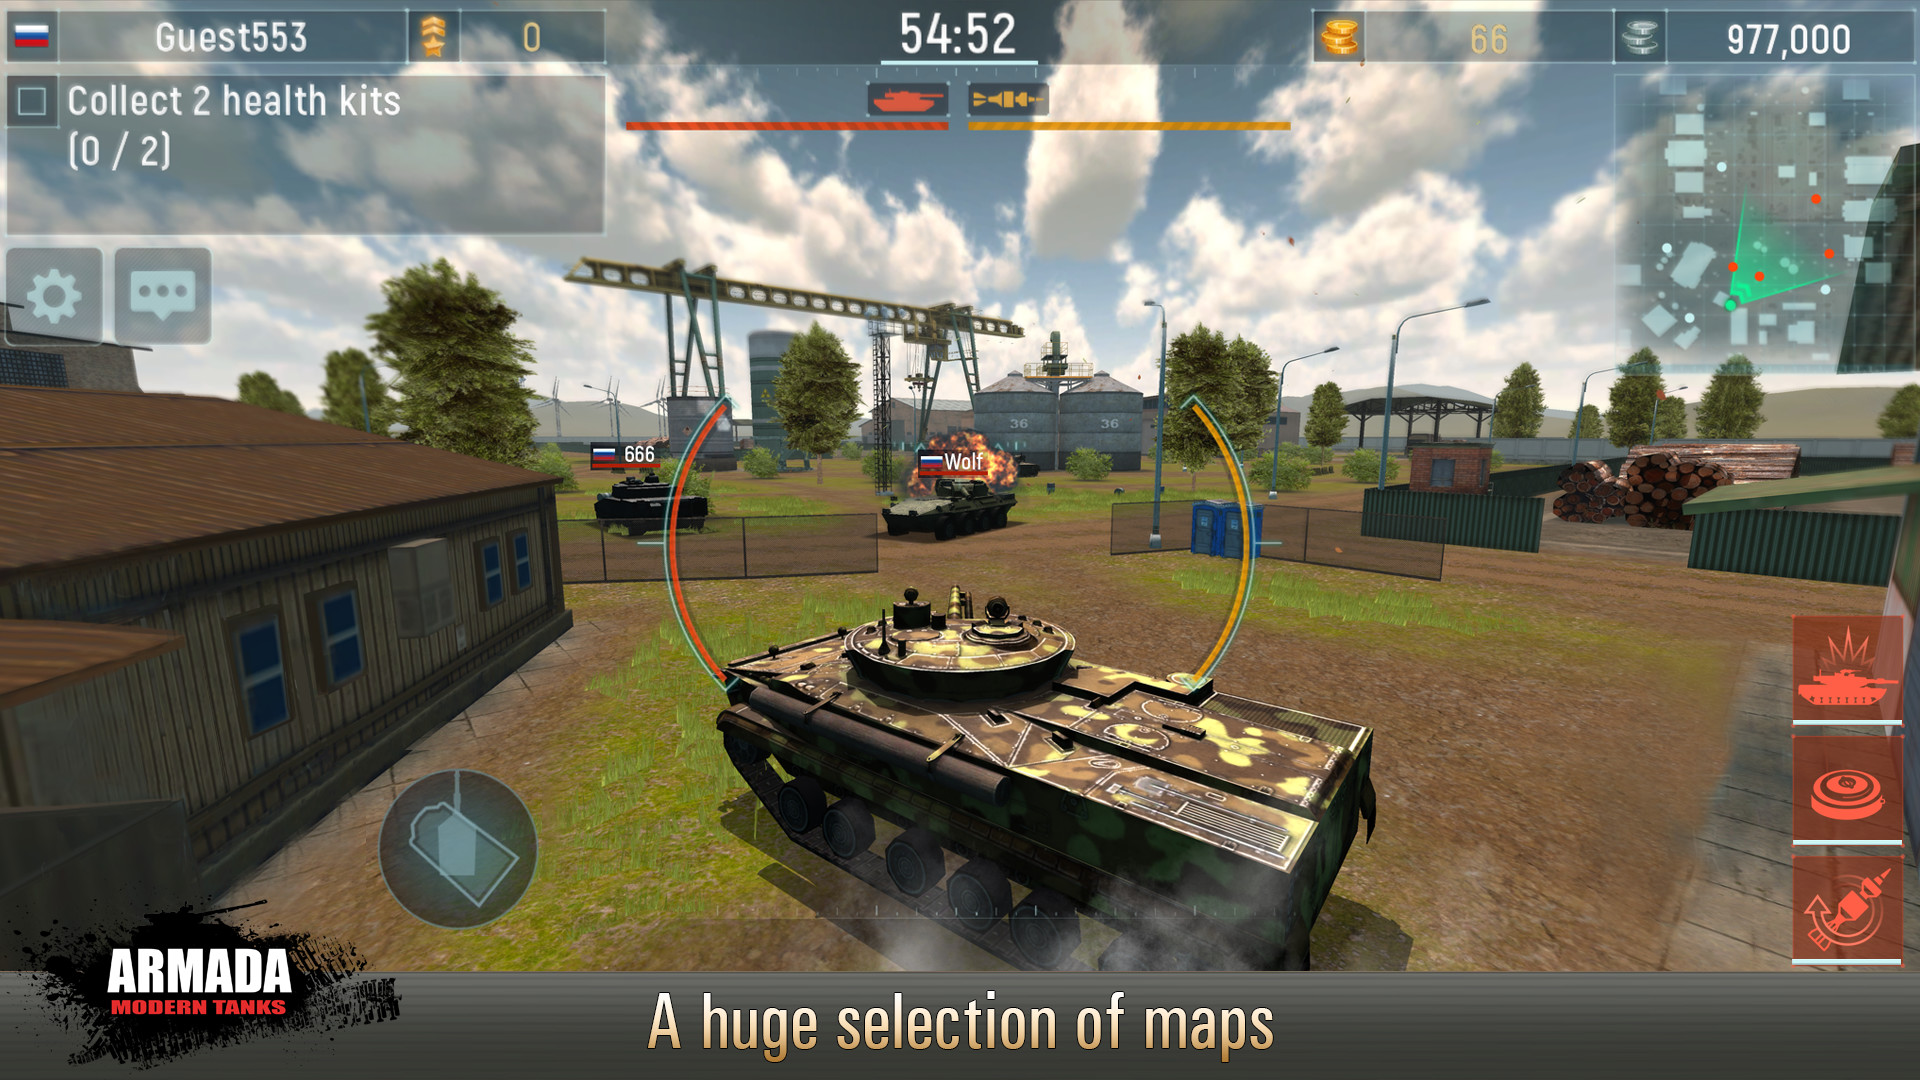 tank battle game tank battle unblocked